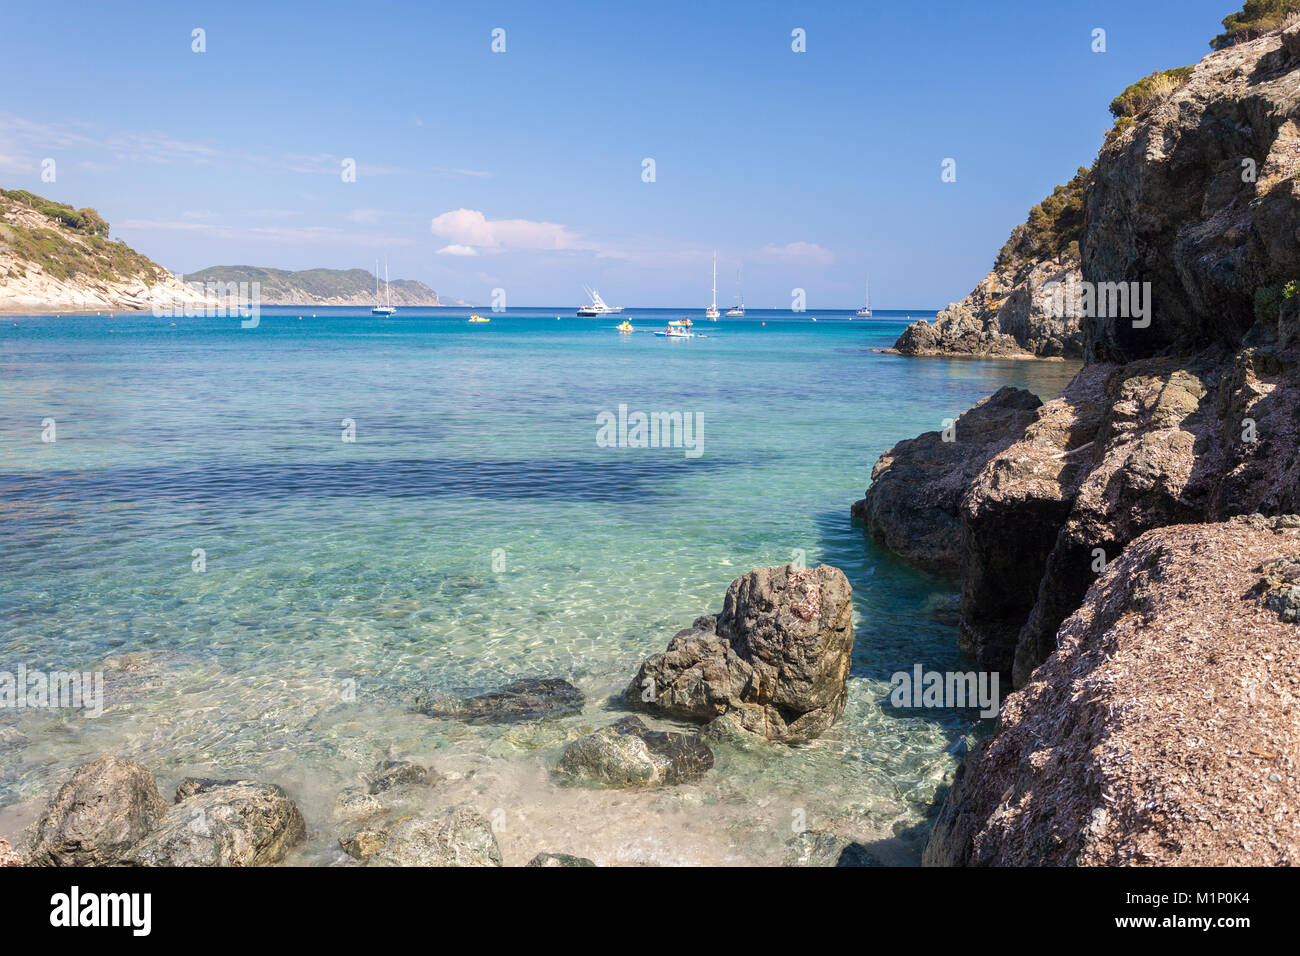 Segelboote im türkisfarbenen Meer, Fetovaia, Campo nell'Elba, Insel Elba, Livorno Provinz, Toskana, Italien, Europa Stockfoto